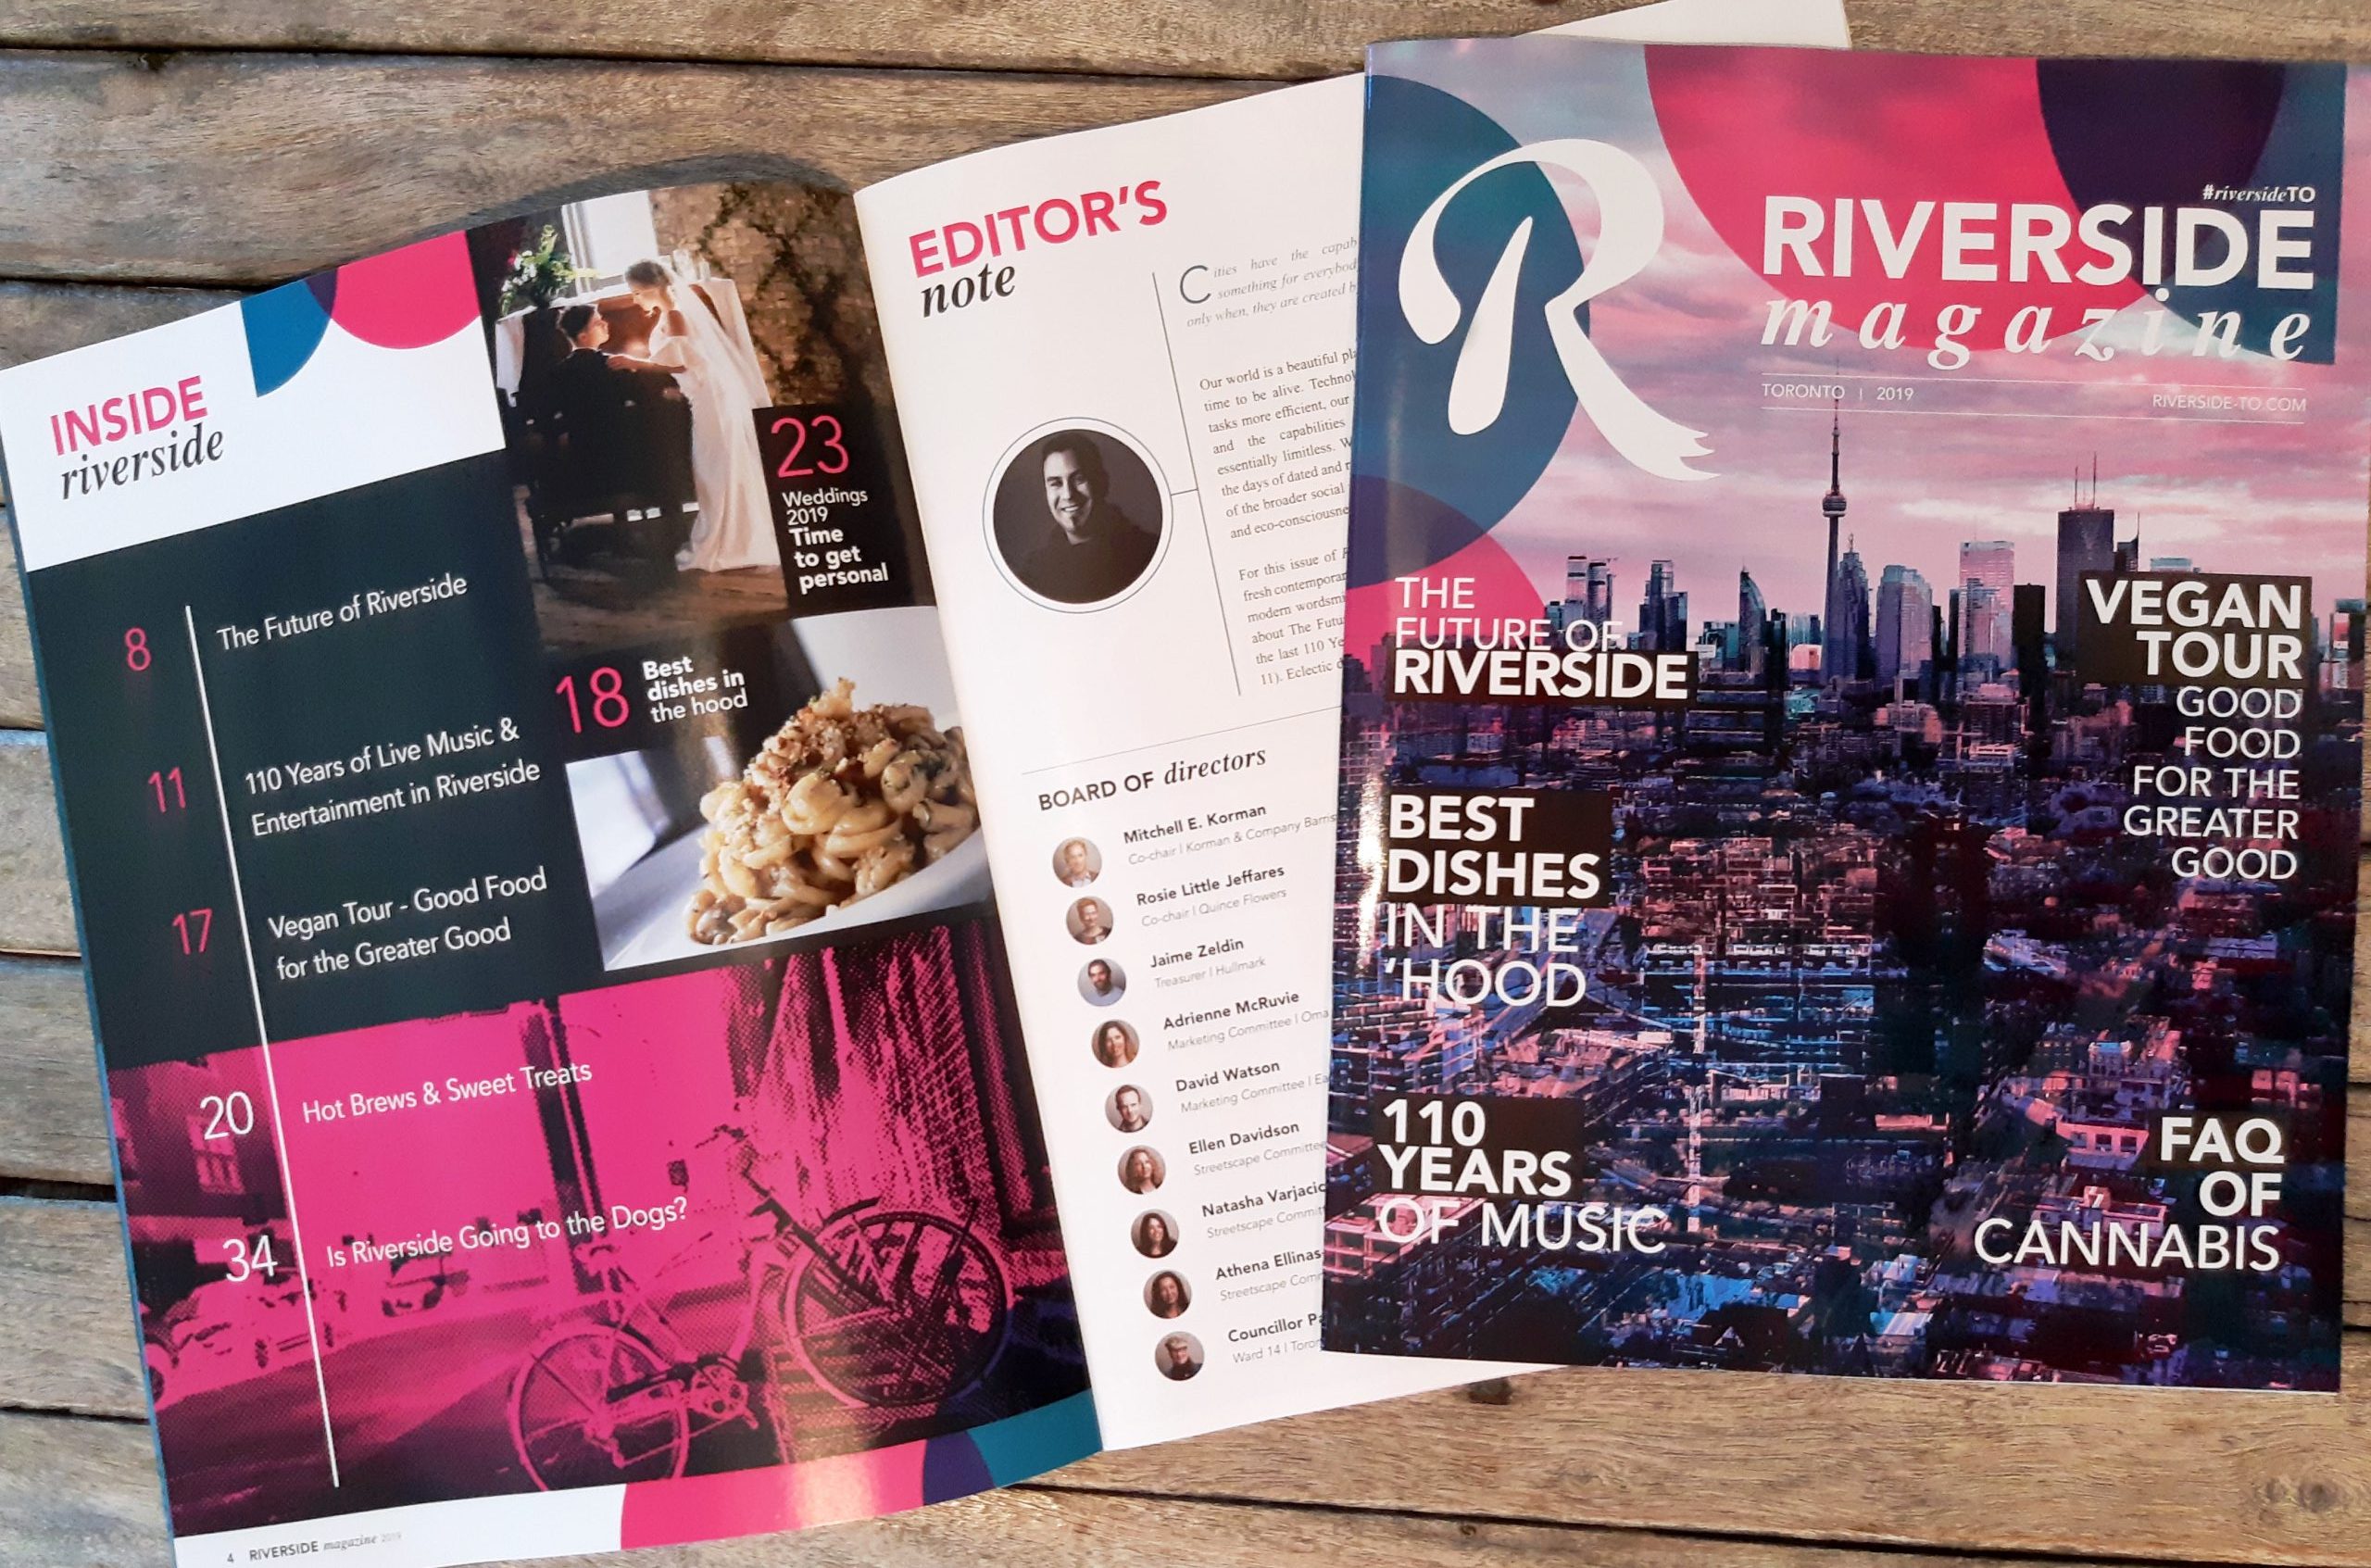 Riverside Magazine 2019, featured Toronto's Riverside neighbourhood